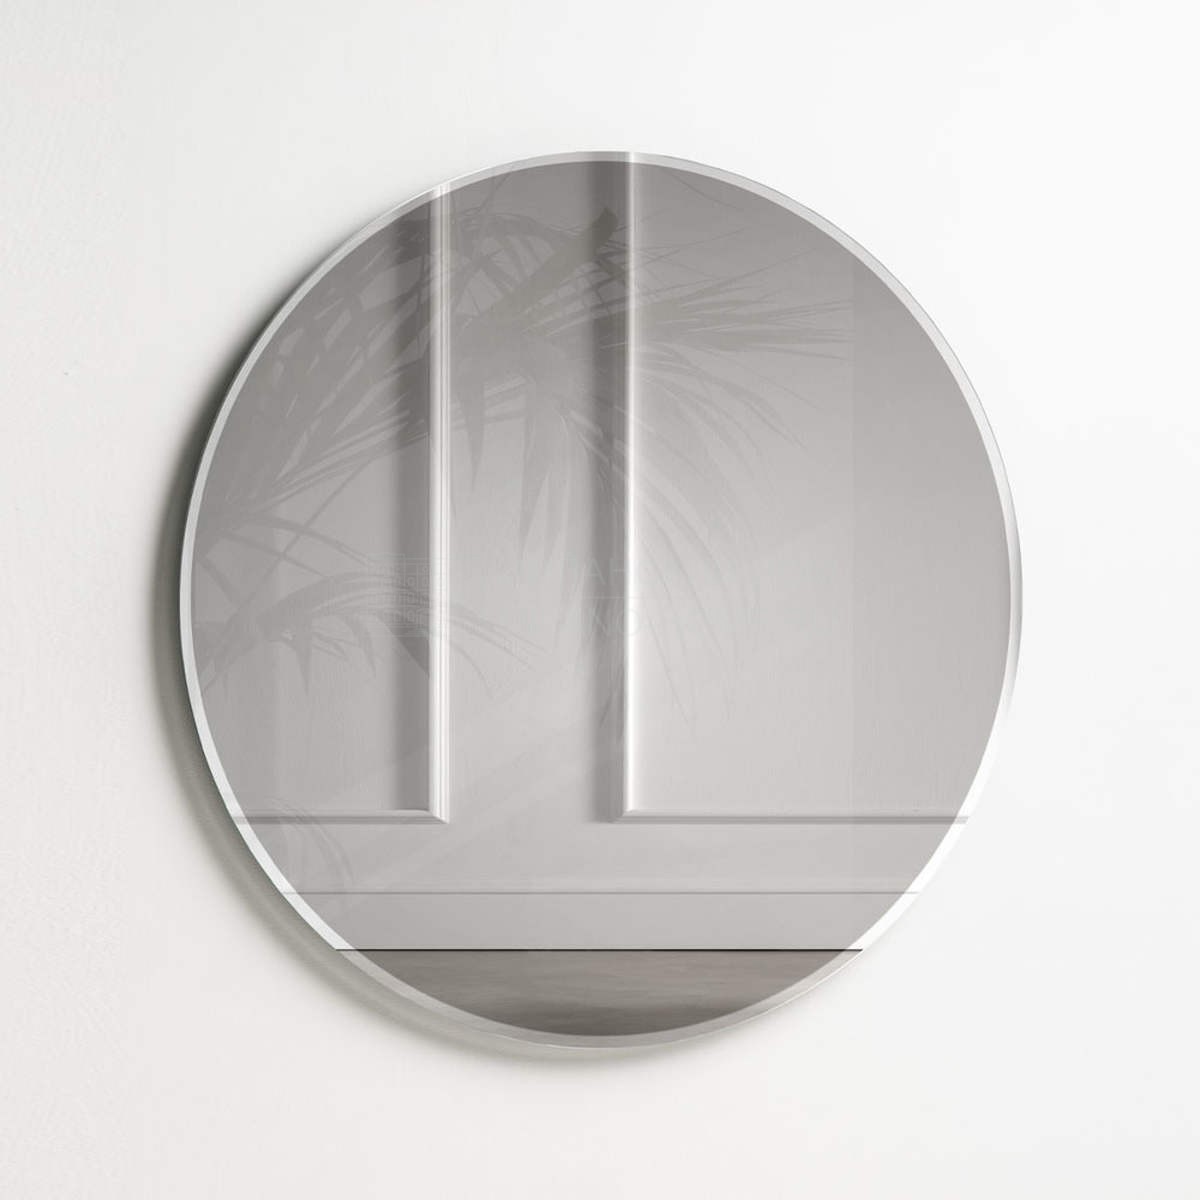 Зеркало настенное SP 280 wall mirror  из Италии фабрики TOSCONOVA